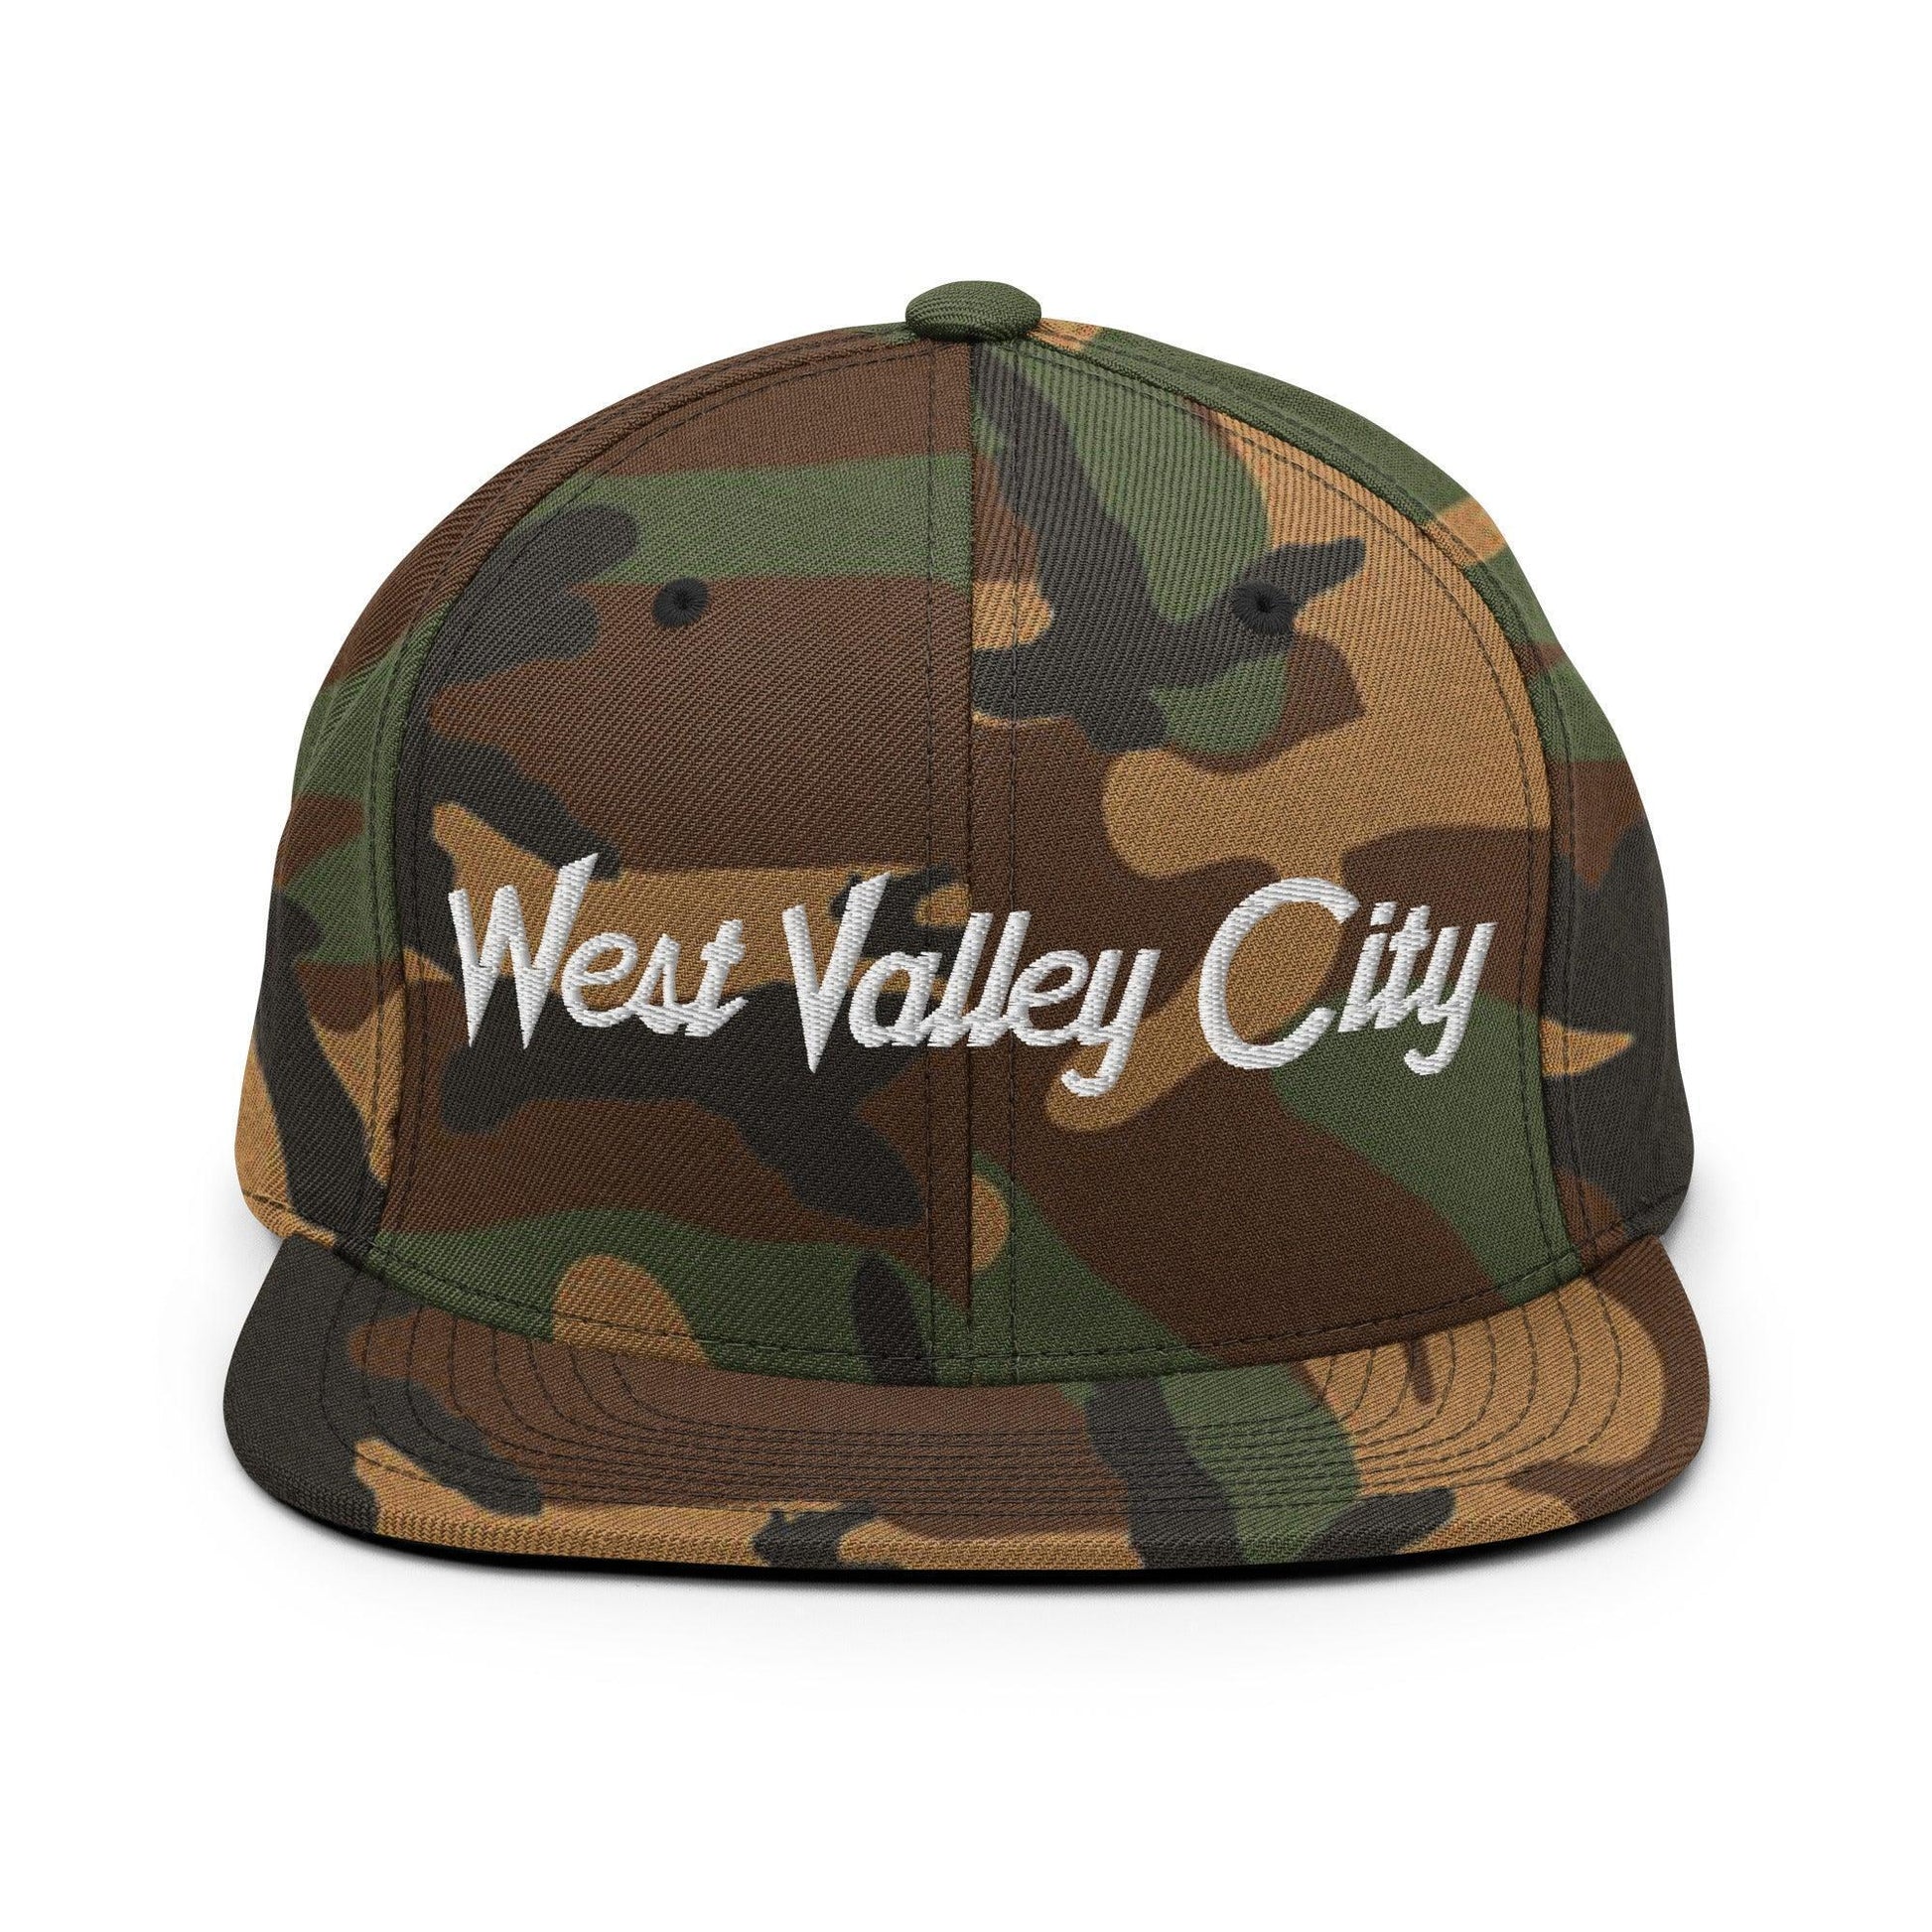 West Valley City Script Snapback Hat Green Camo